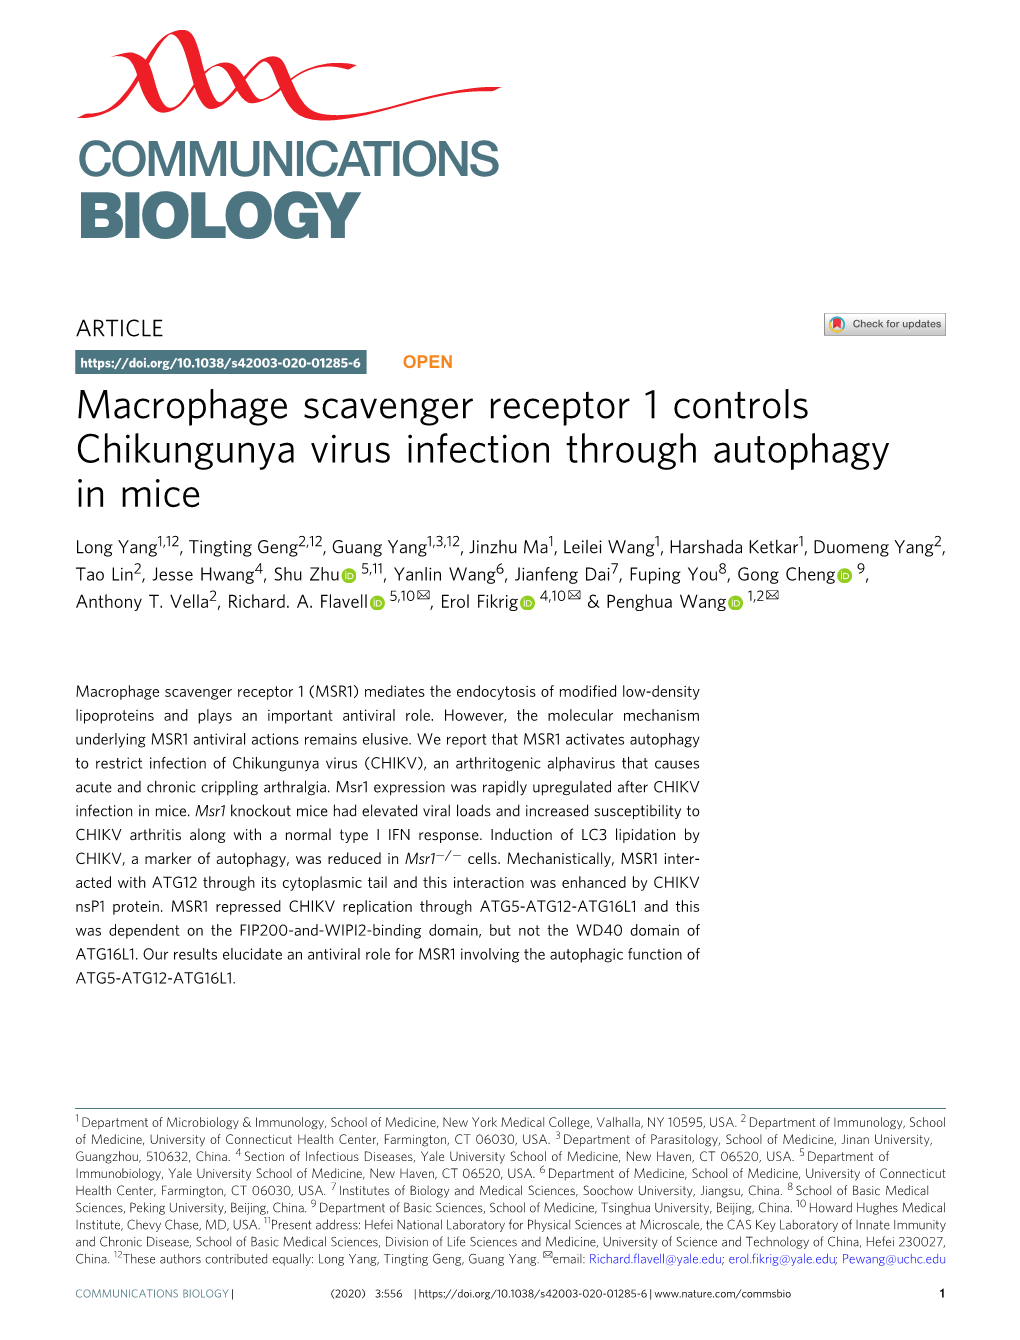 Macrophage Scavenger Receptor 1 Controls Chikungunya Virus Infection Through Autophagy in Mice